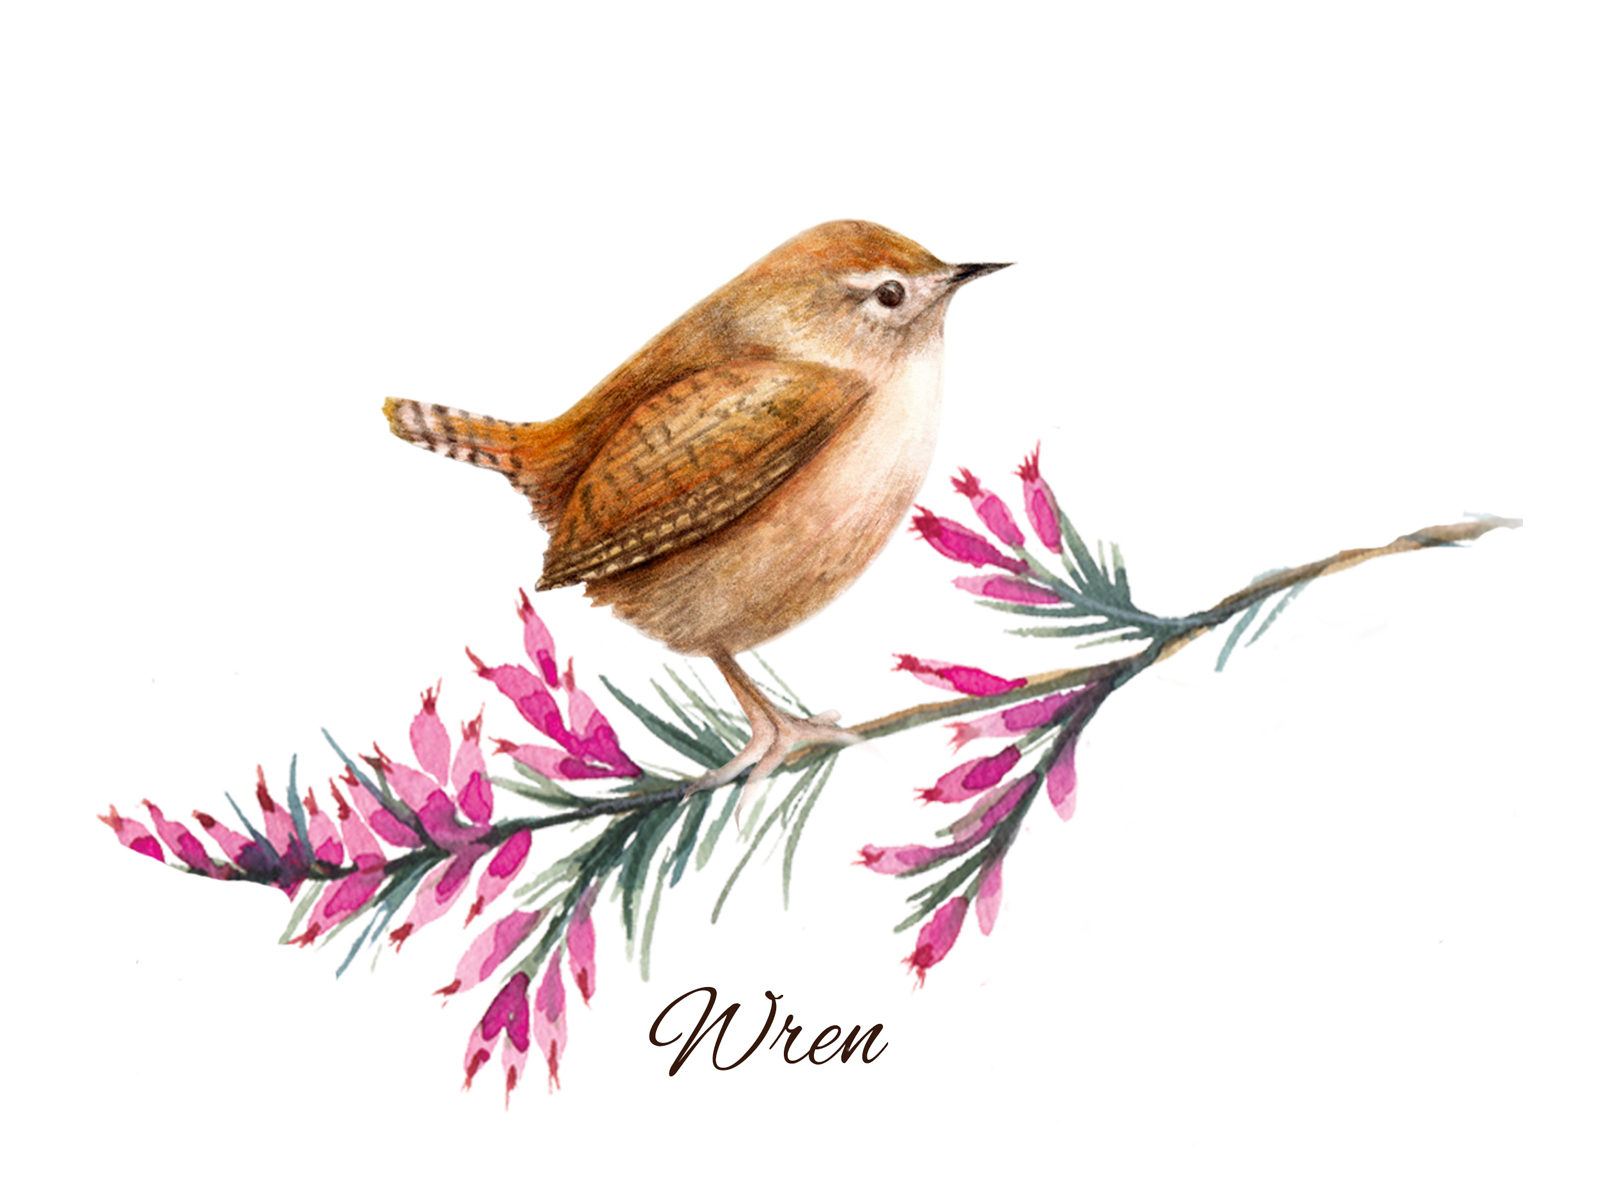 Watercolour Wildlife Bird Illustration Wren by Amanda Dilworth on Dribbble